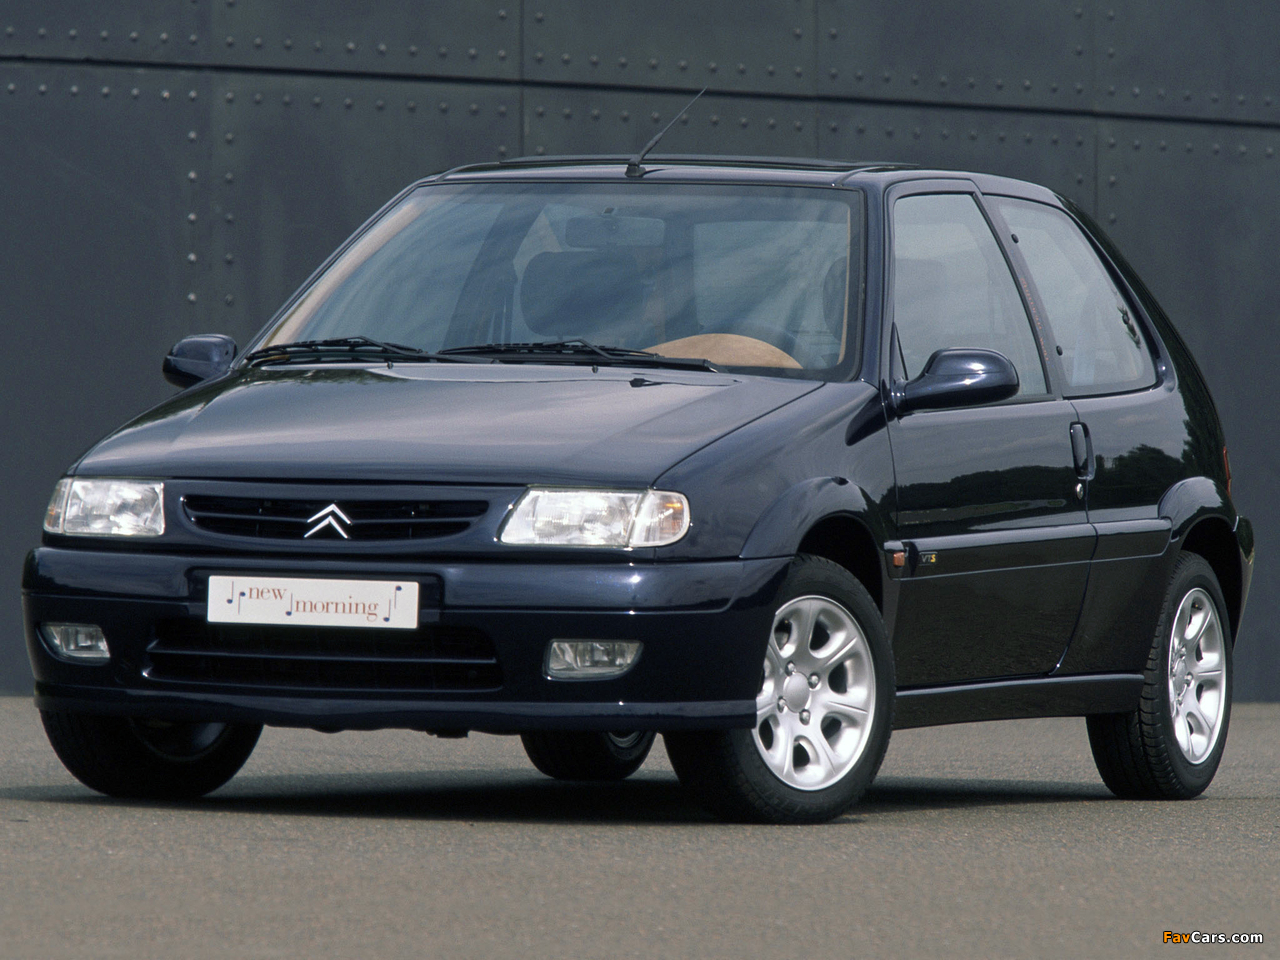 Citroën Saxo VTS New Morning 1998 photos (1280 x 960)